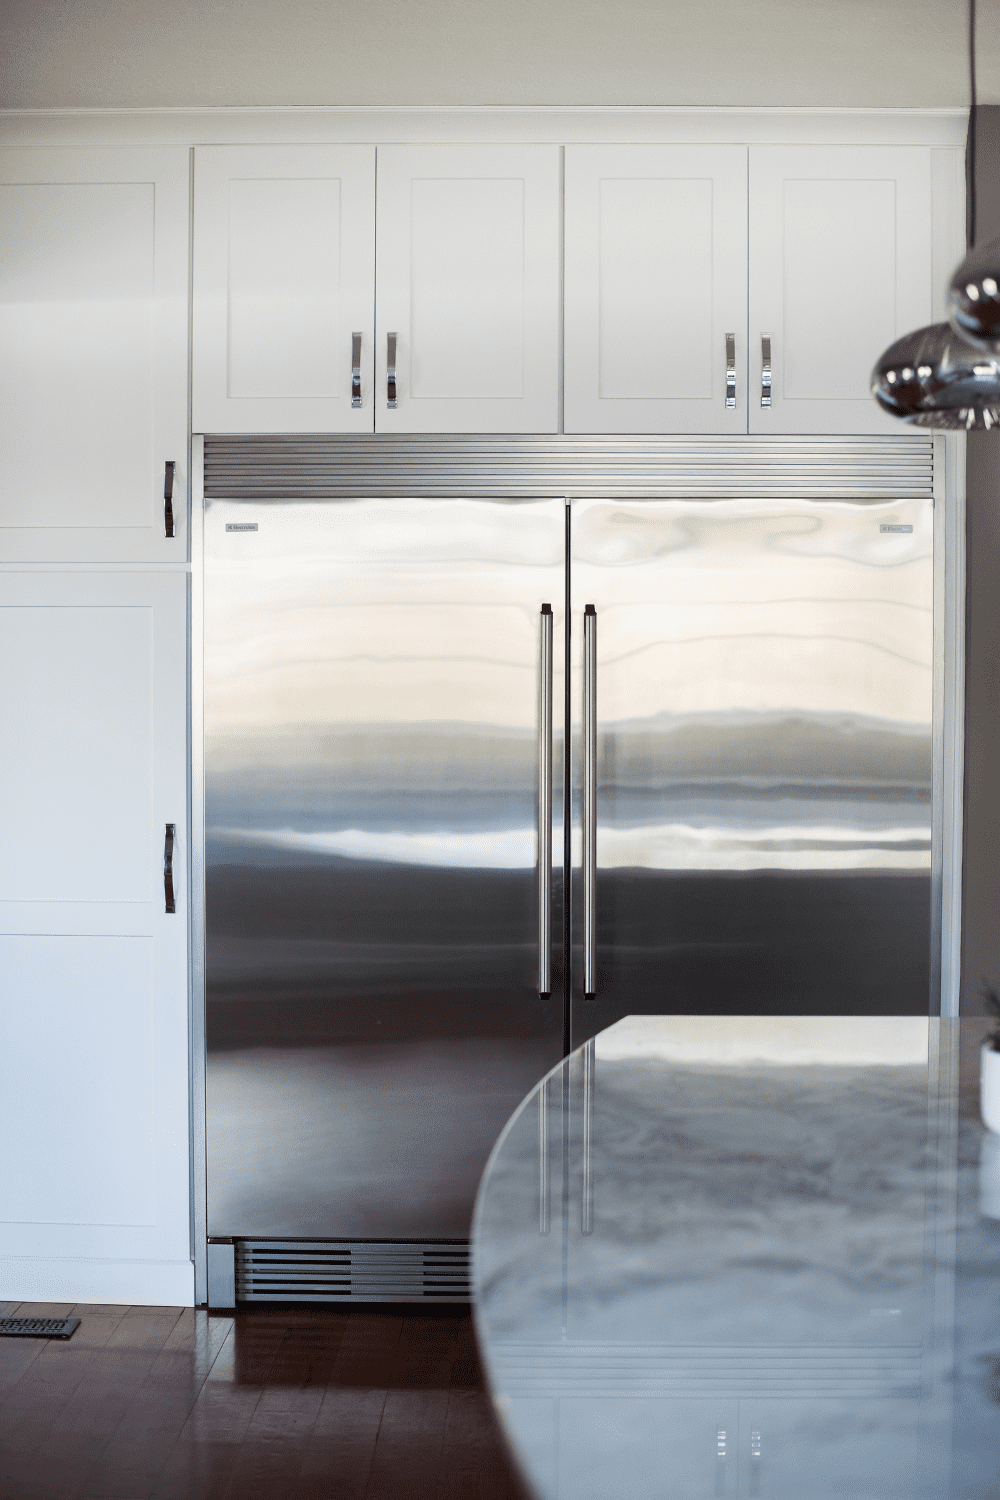 Nicholas Design Build | A stainless steel refrigerator in a kitchen.